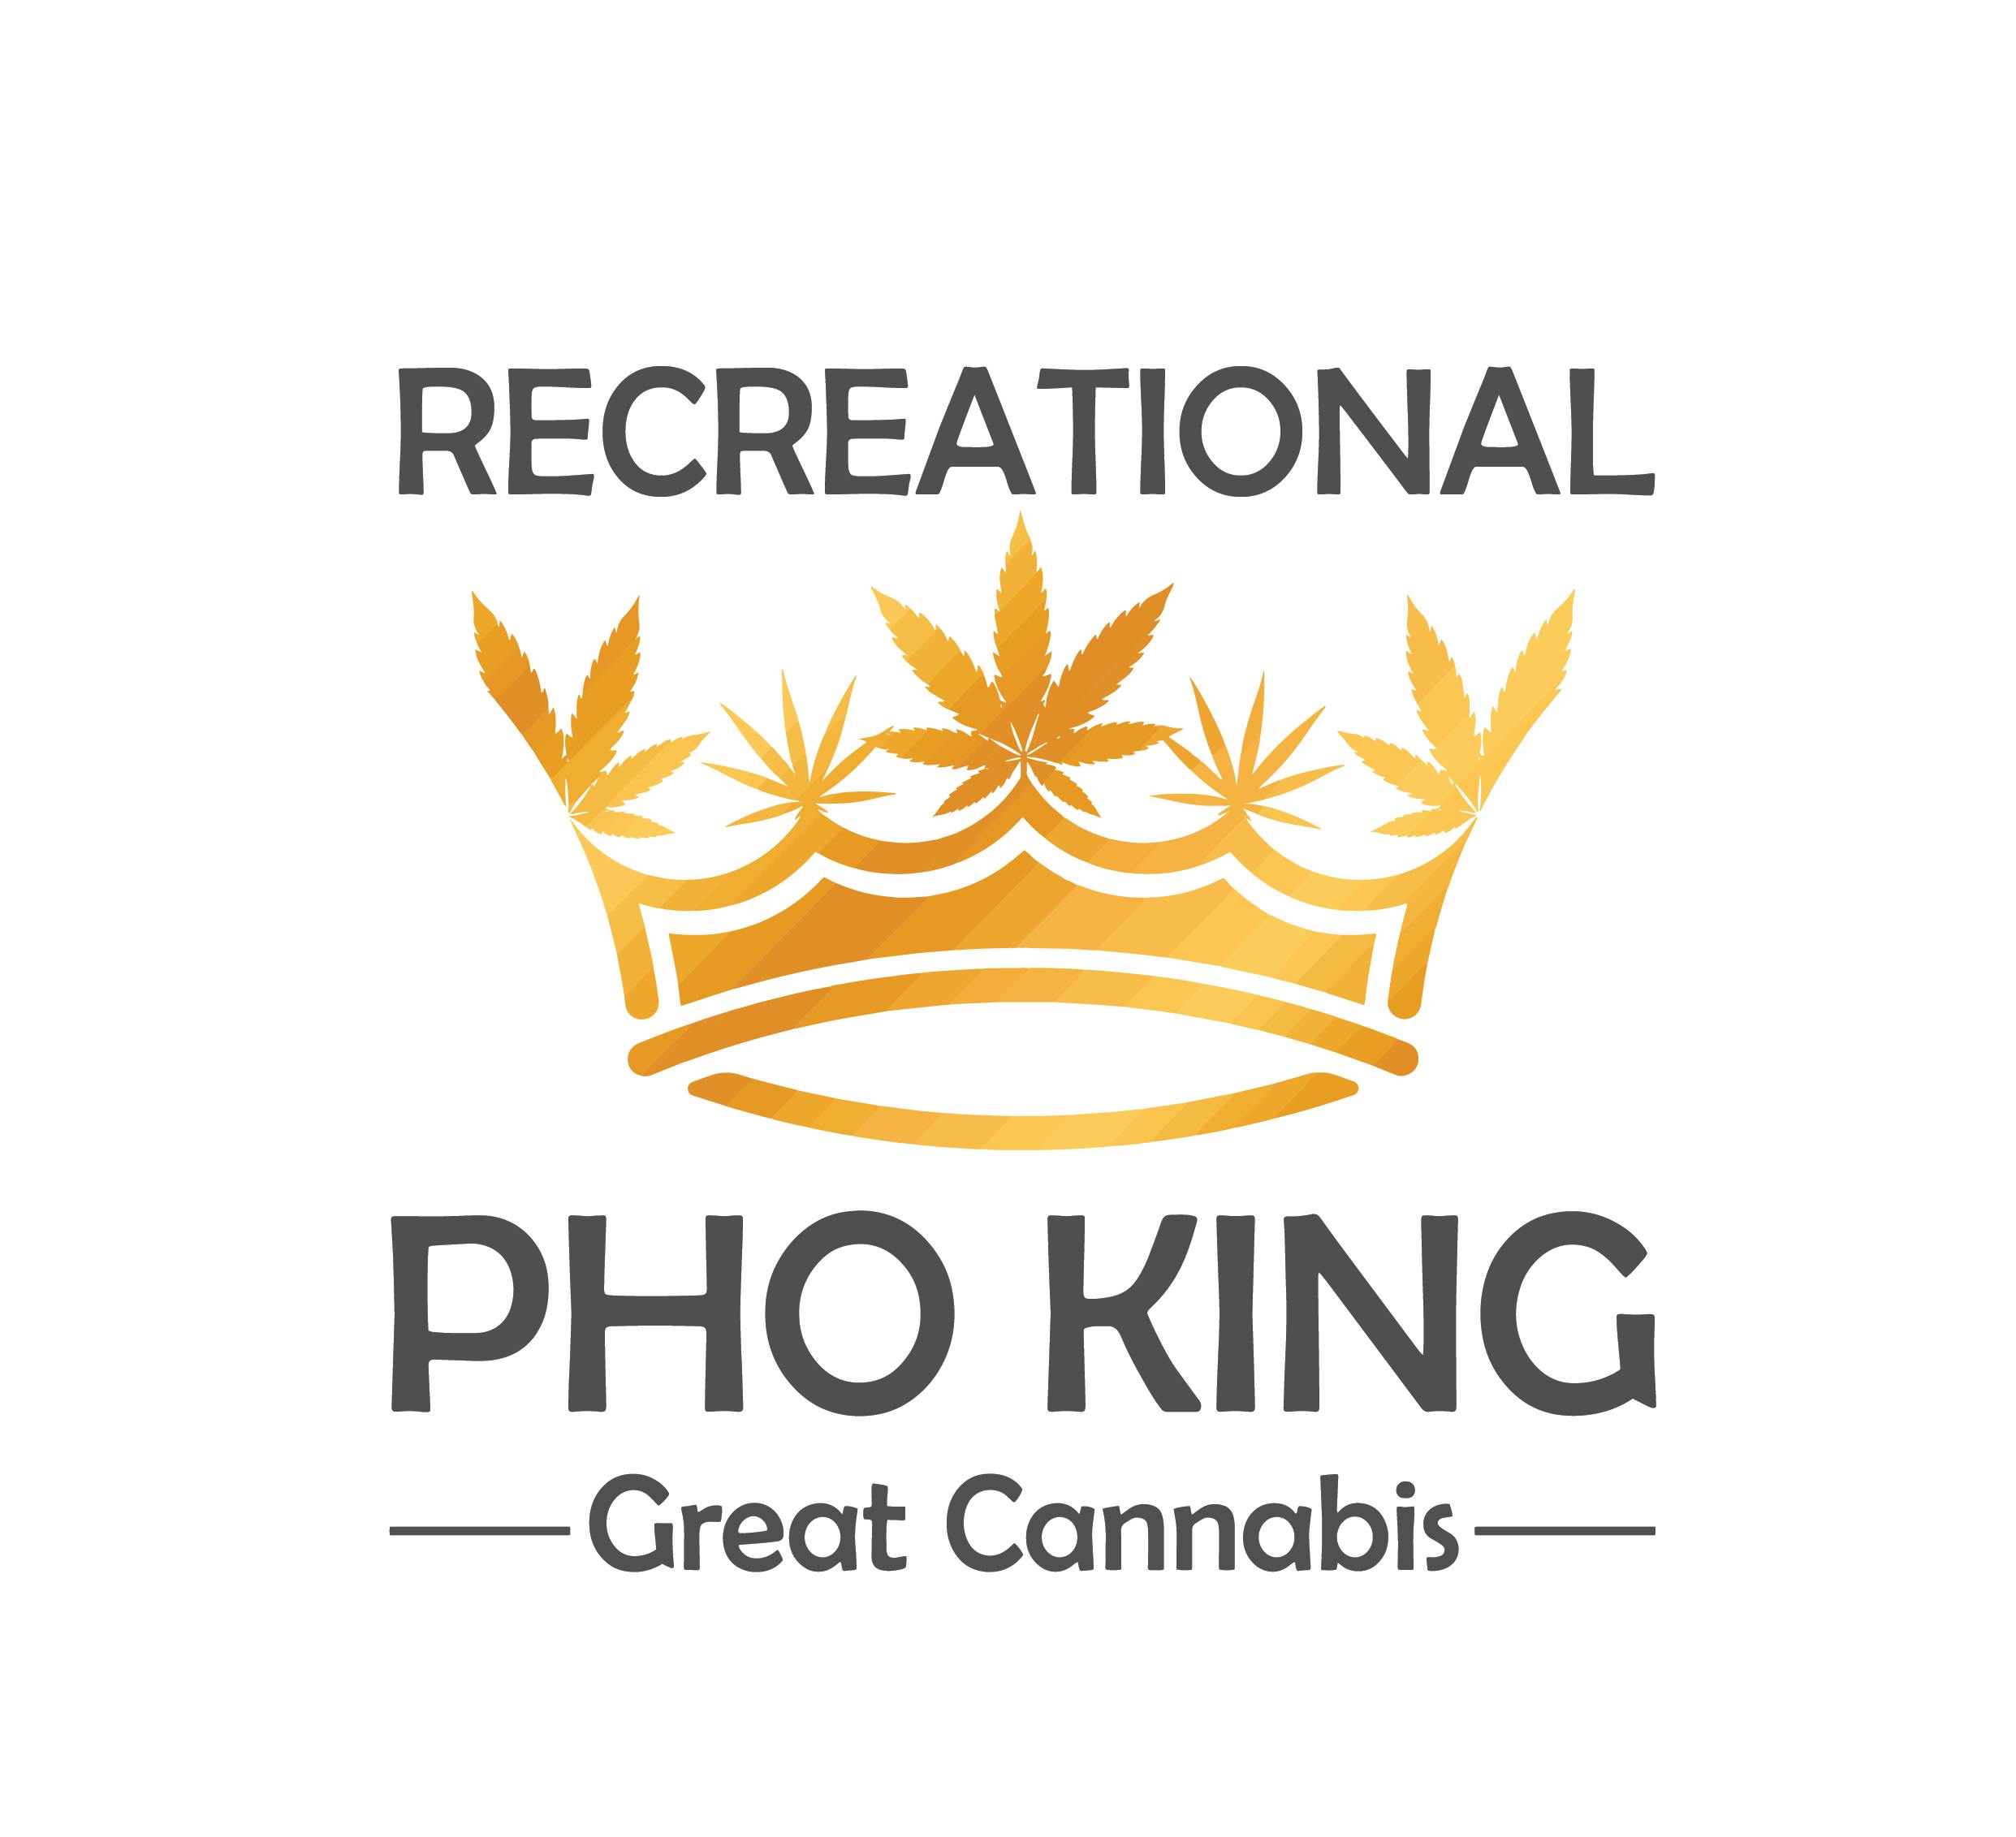 Pho King Great Cannabis: Recreational-logo